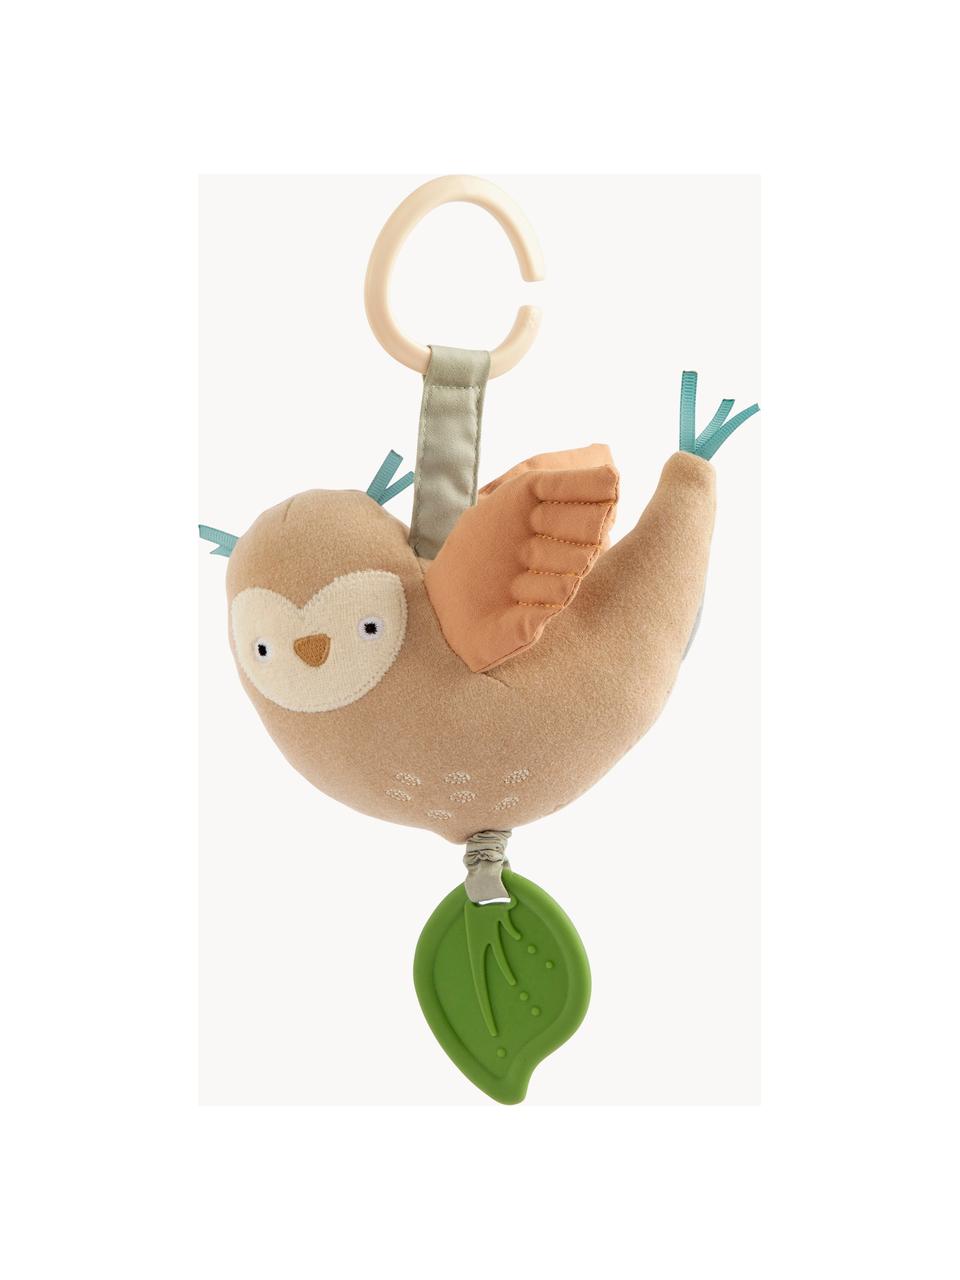 Aktivity hračka Blinky the Owl, Odstíny béžové, více barev, Š 16 cm, V 17 cm